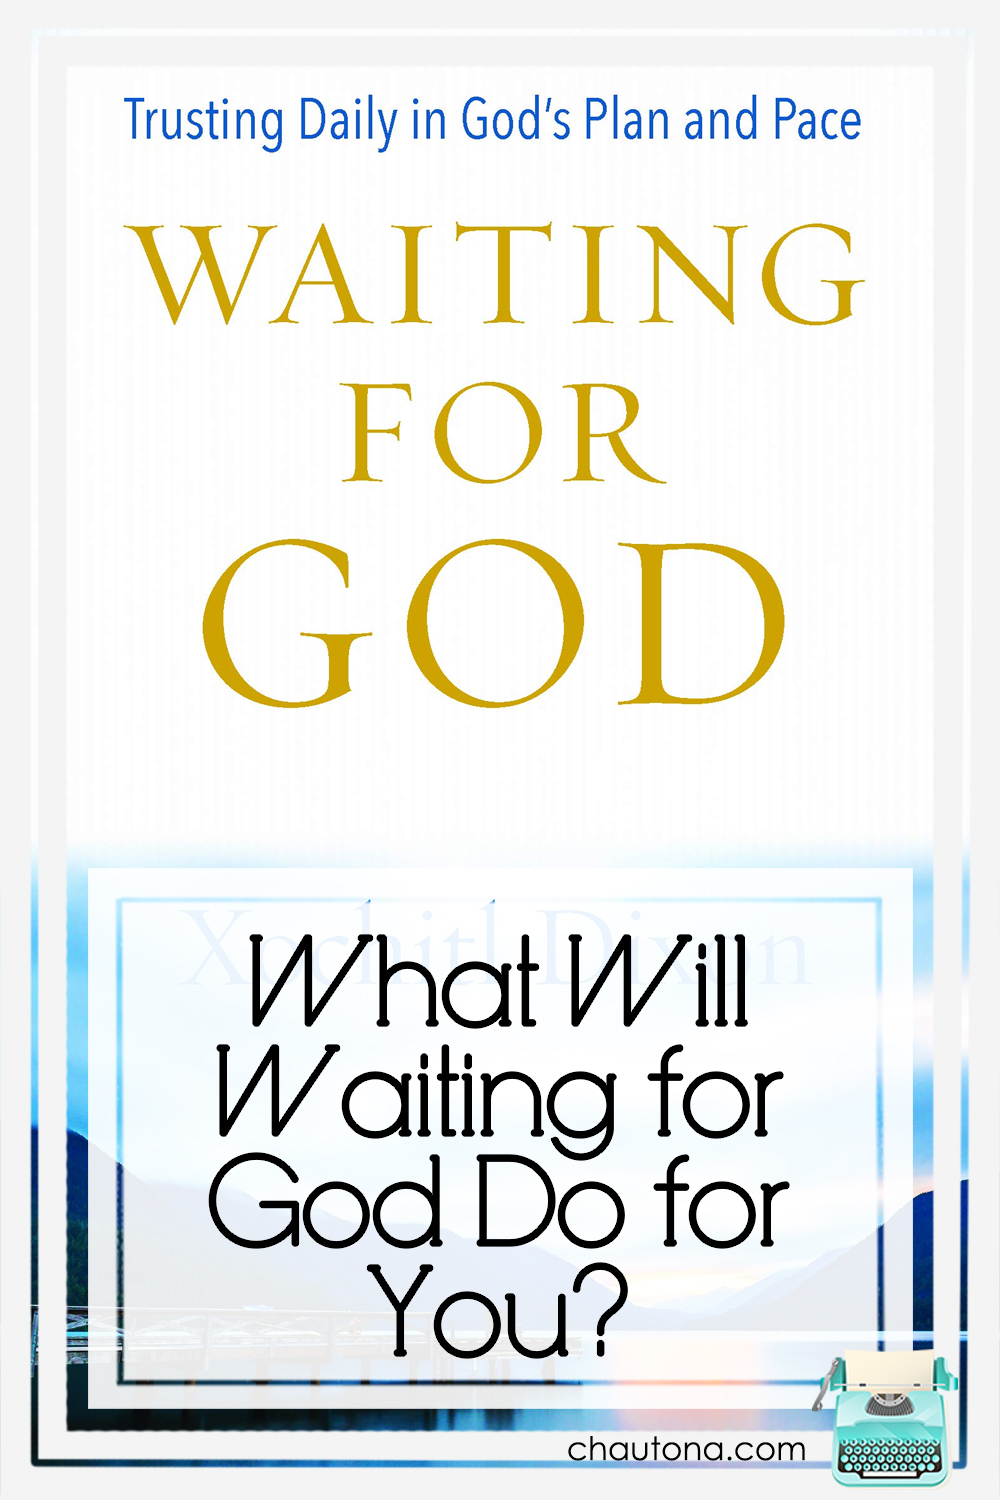 WAiting for God